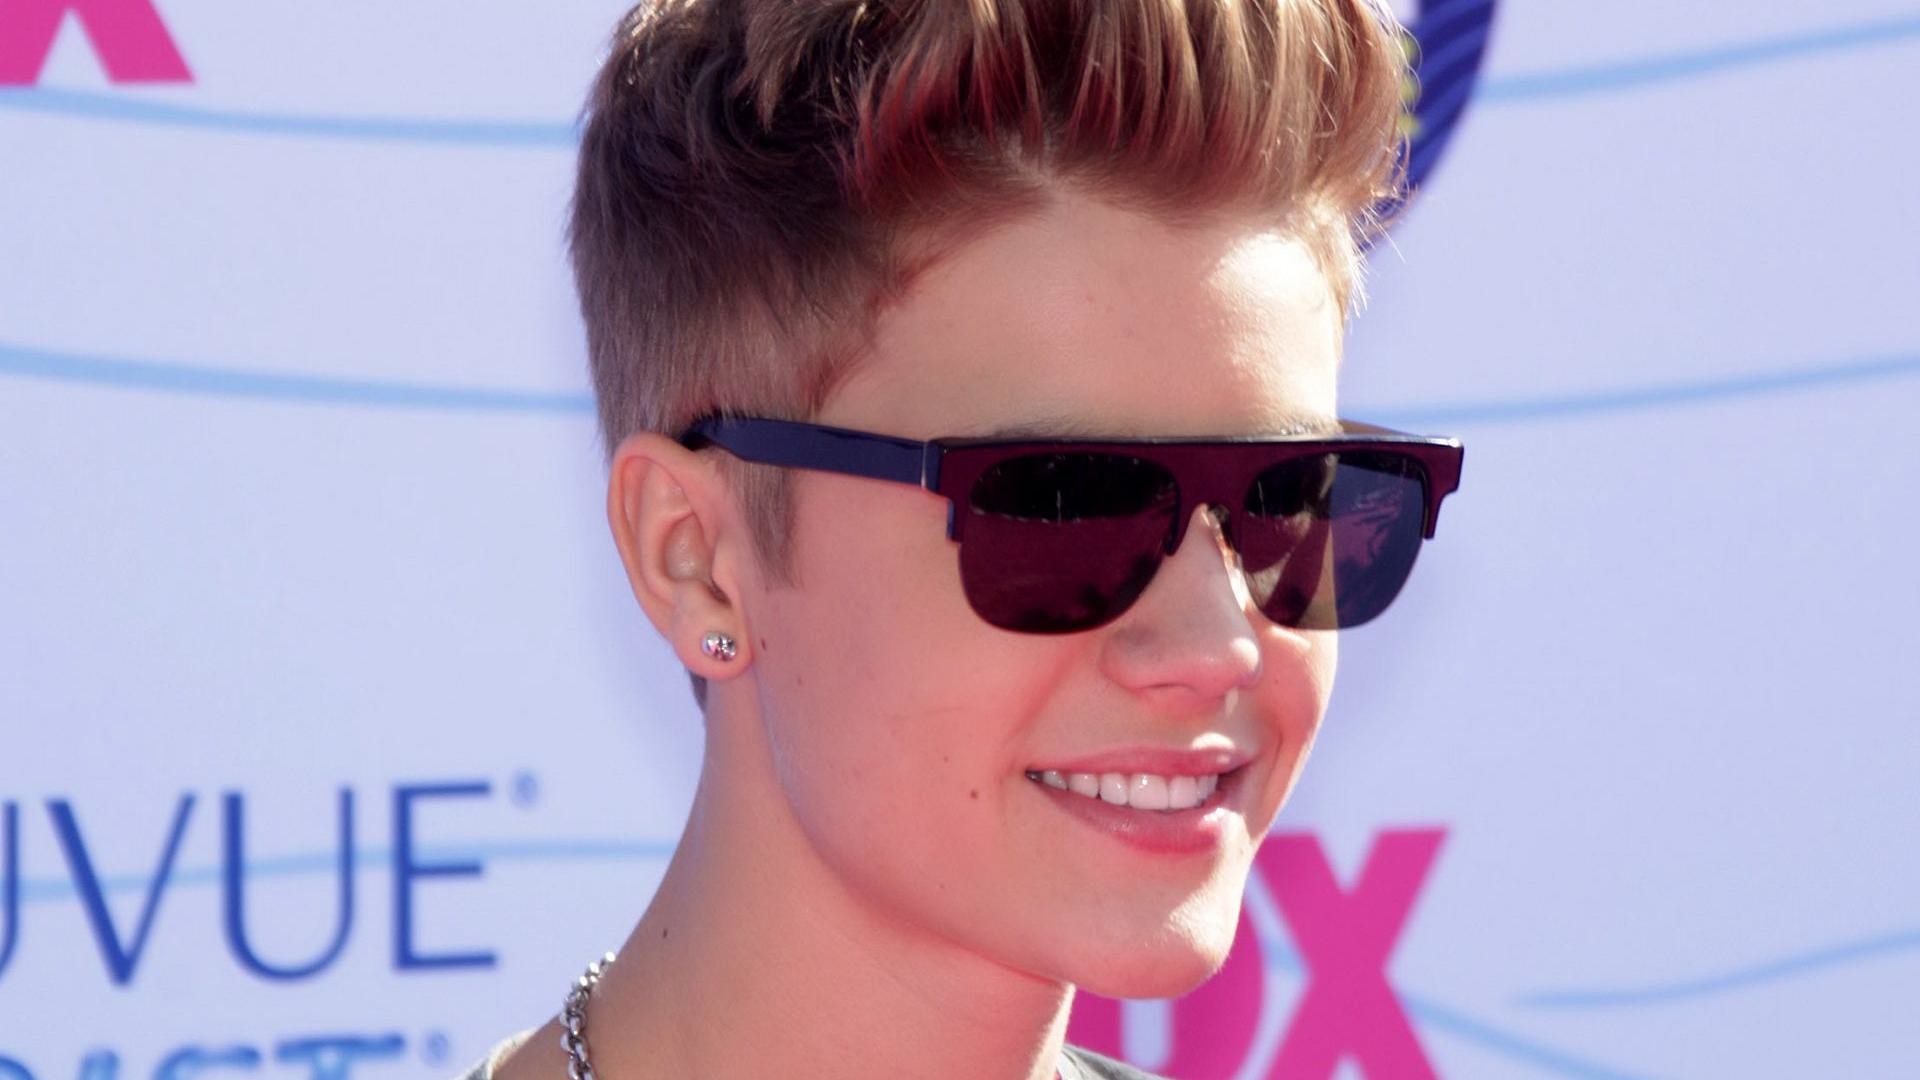 Justin Bieber HD Wallpapers 2013